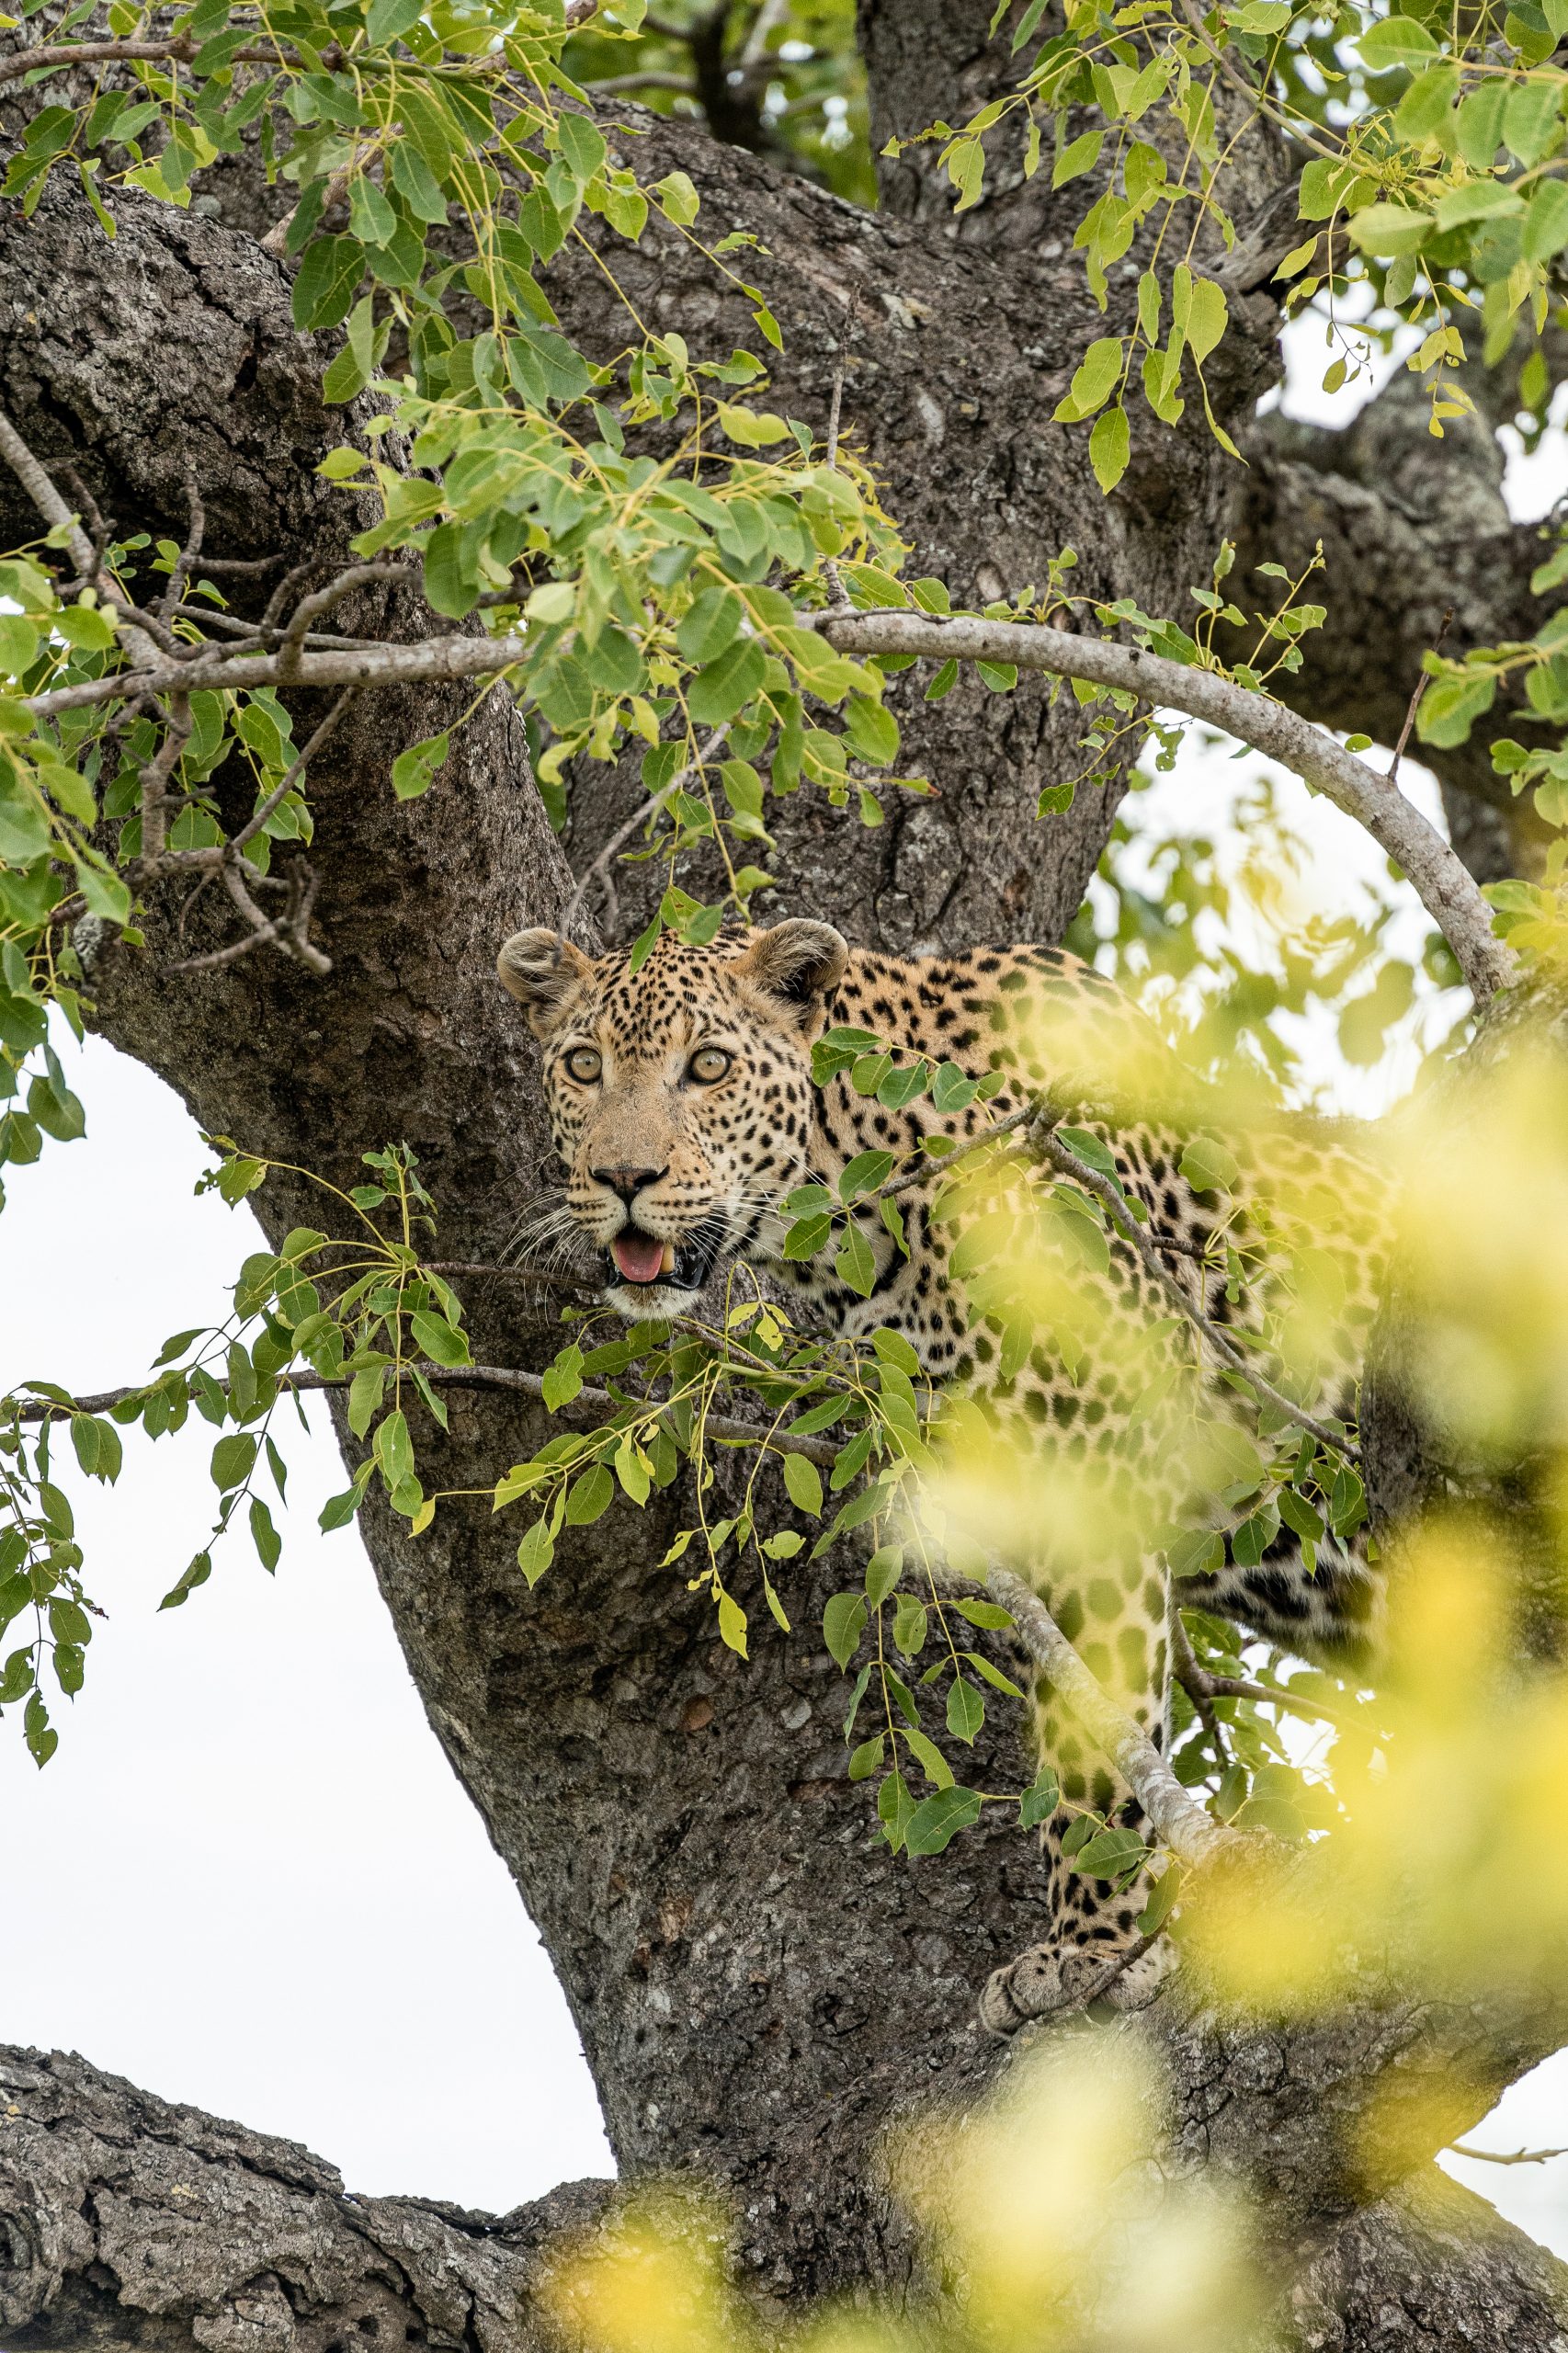 Leopardo a trepar na árvore